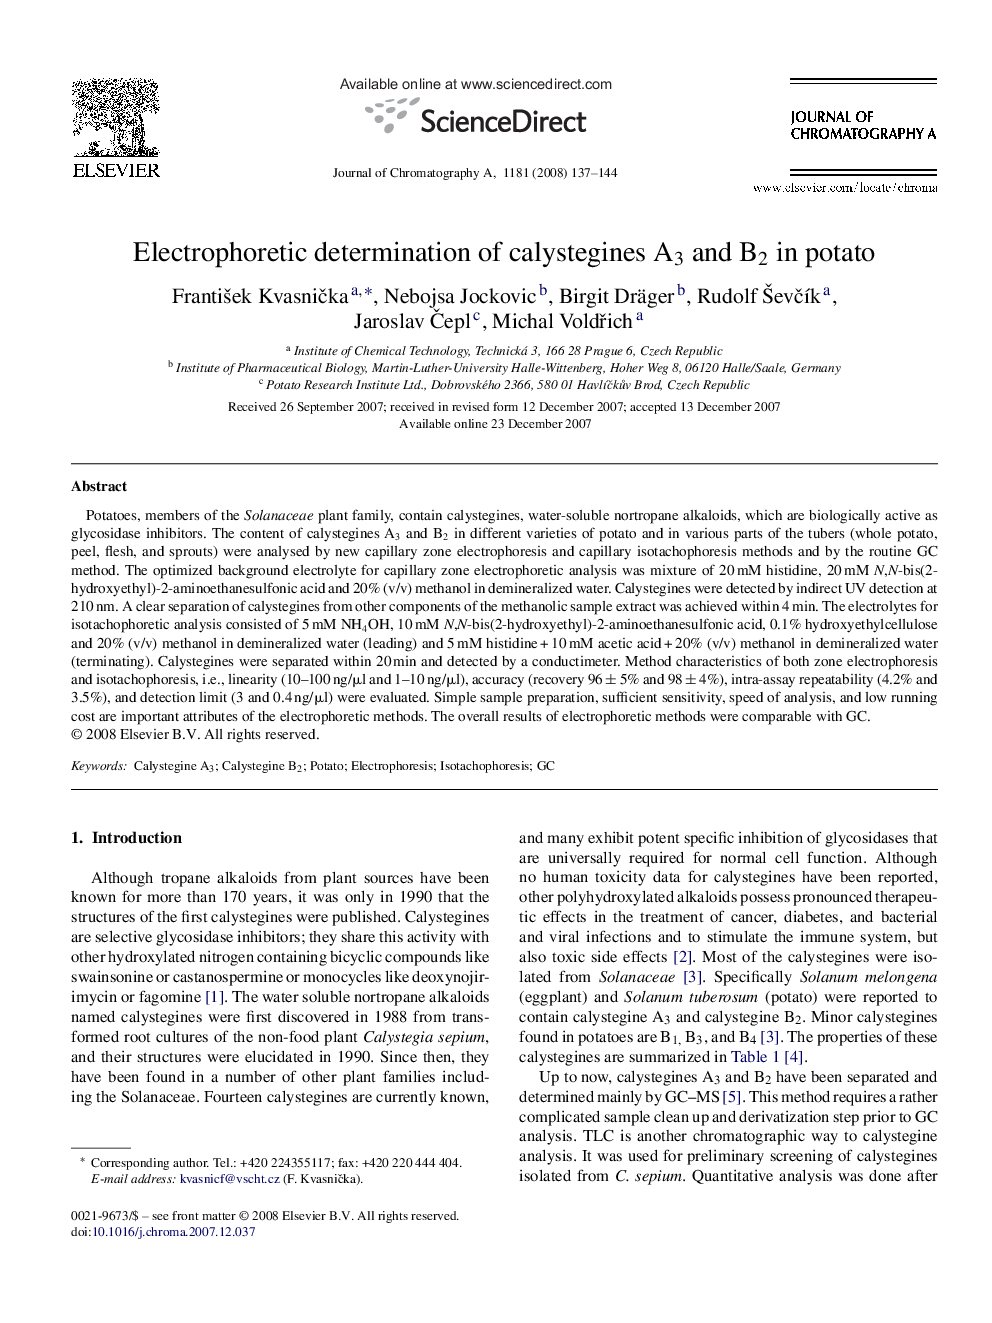 Electrophoretic determination of calystegines A3 and B2 in potato